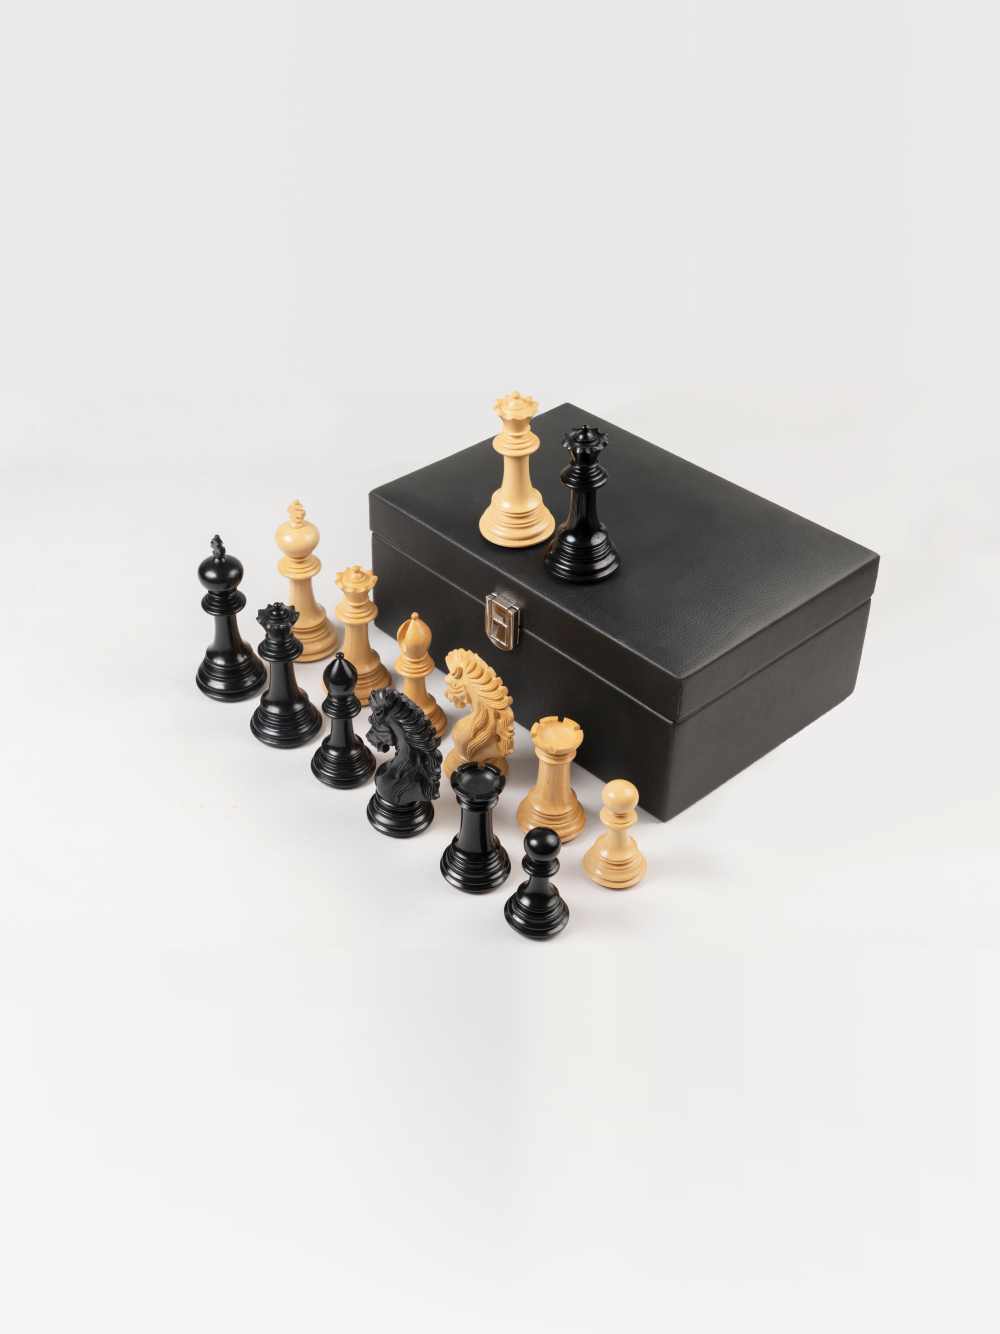 Emperor chess set